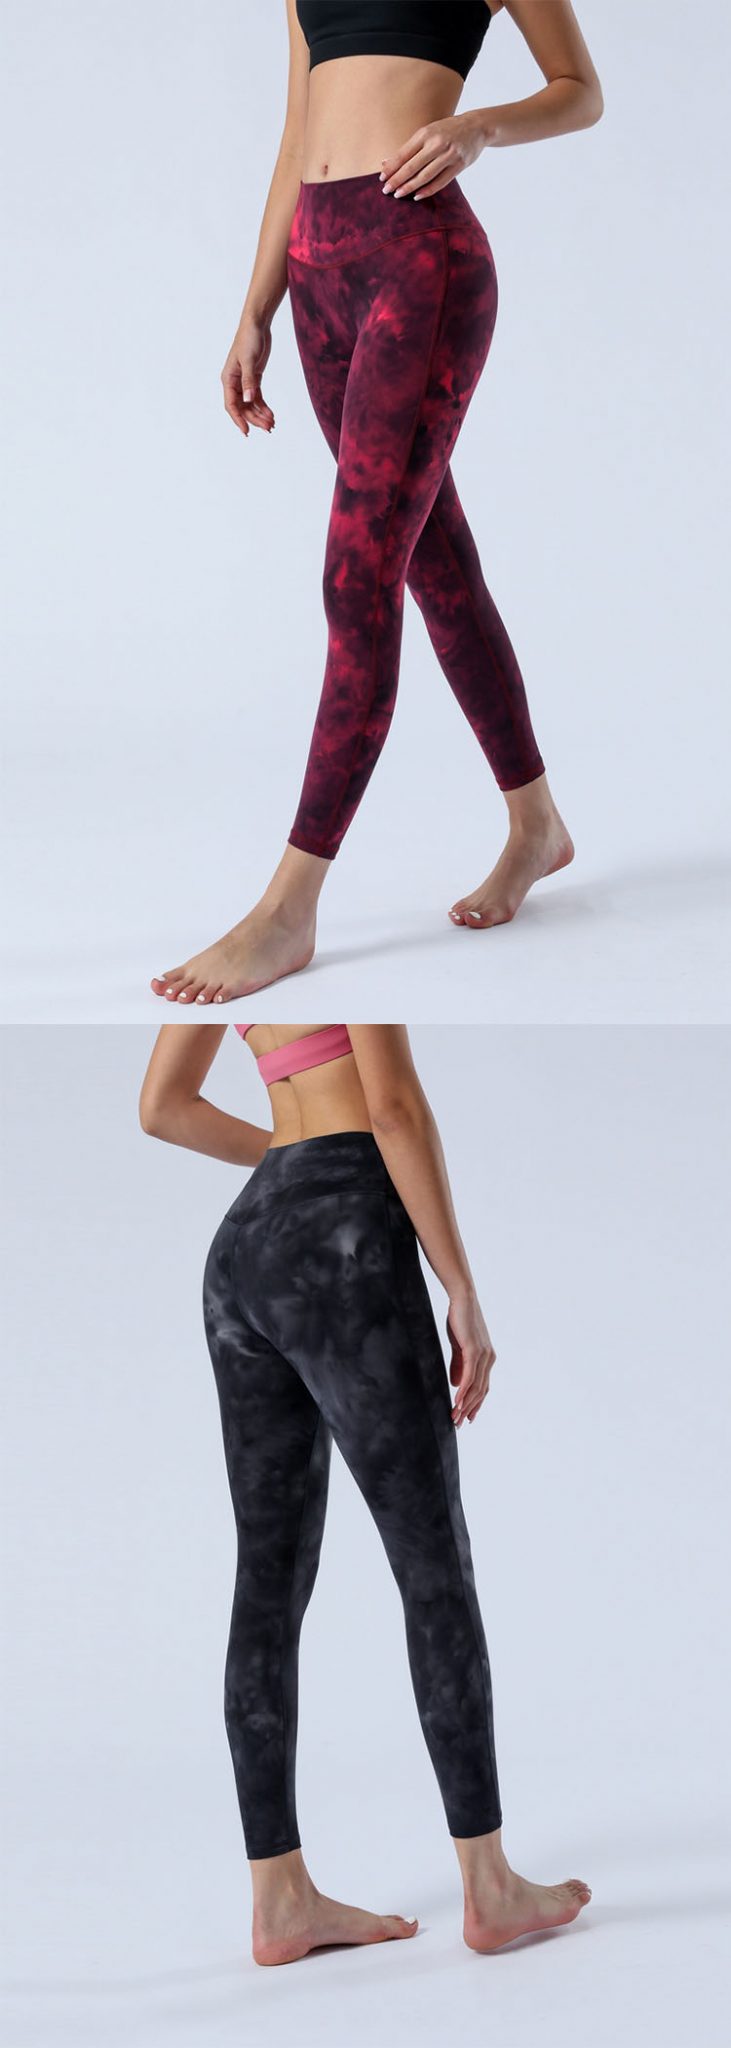 Kamo Fitness Serenity No Front Seam Leggings 25 Inseam Yoga Pants